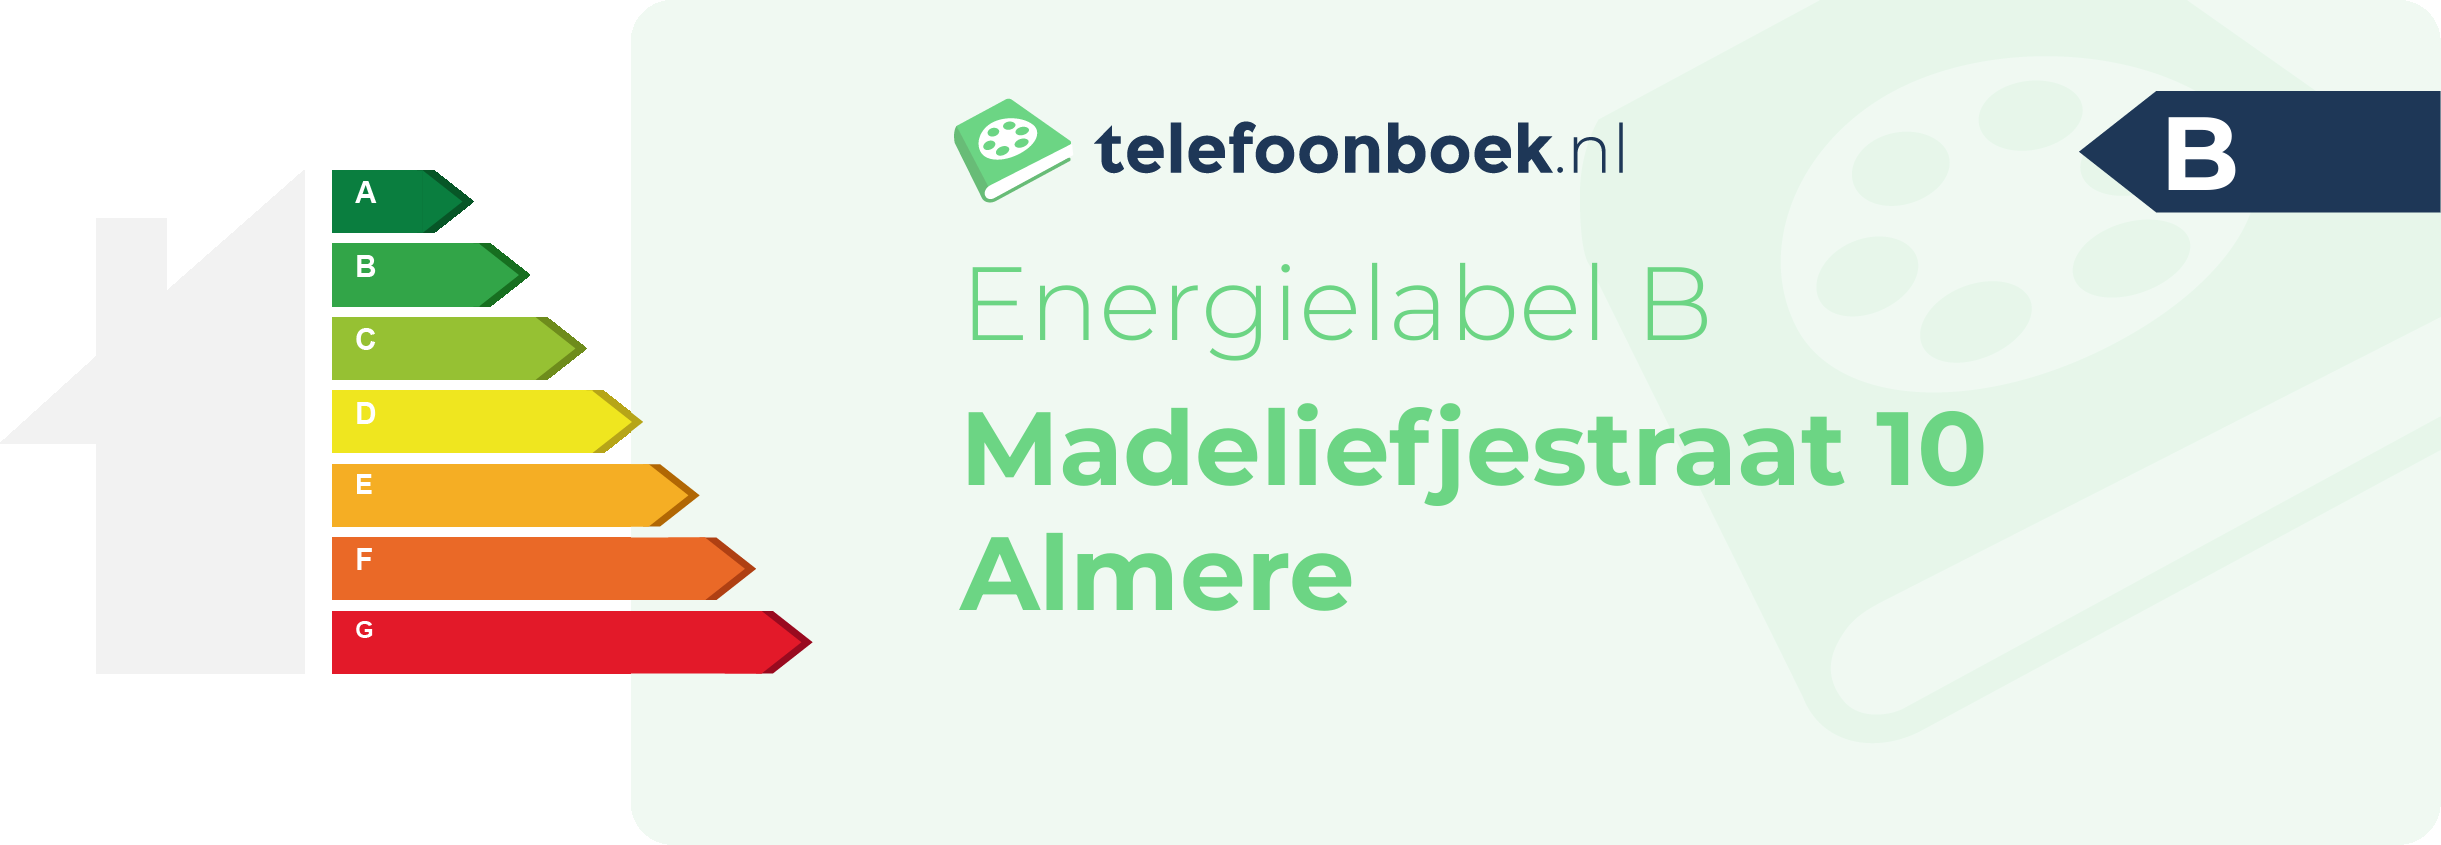 Energielabel Madeliefjestraat 10 Almere